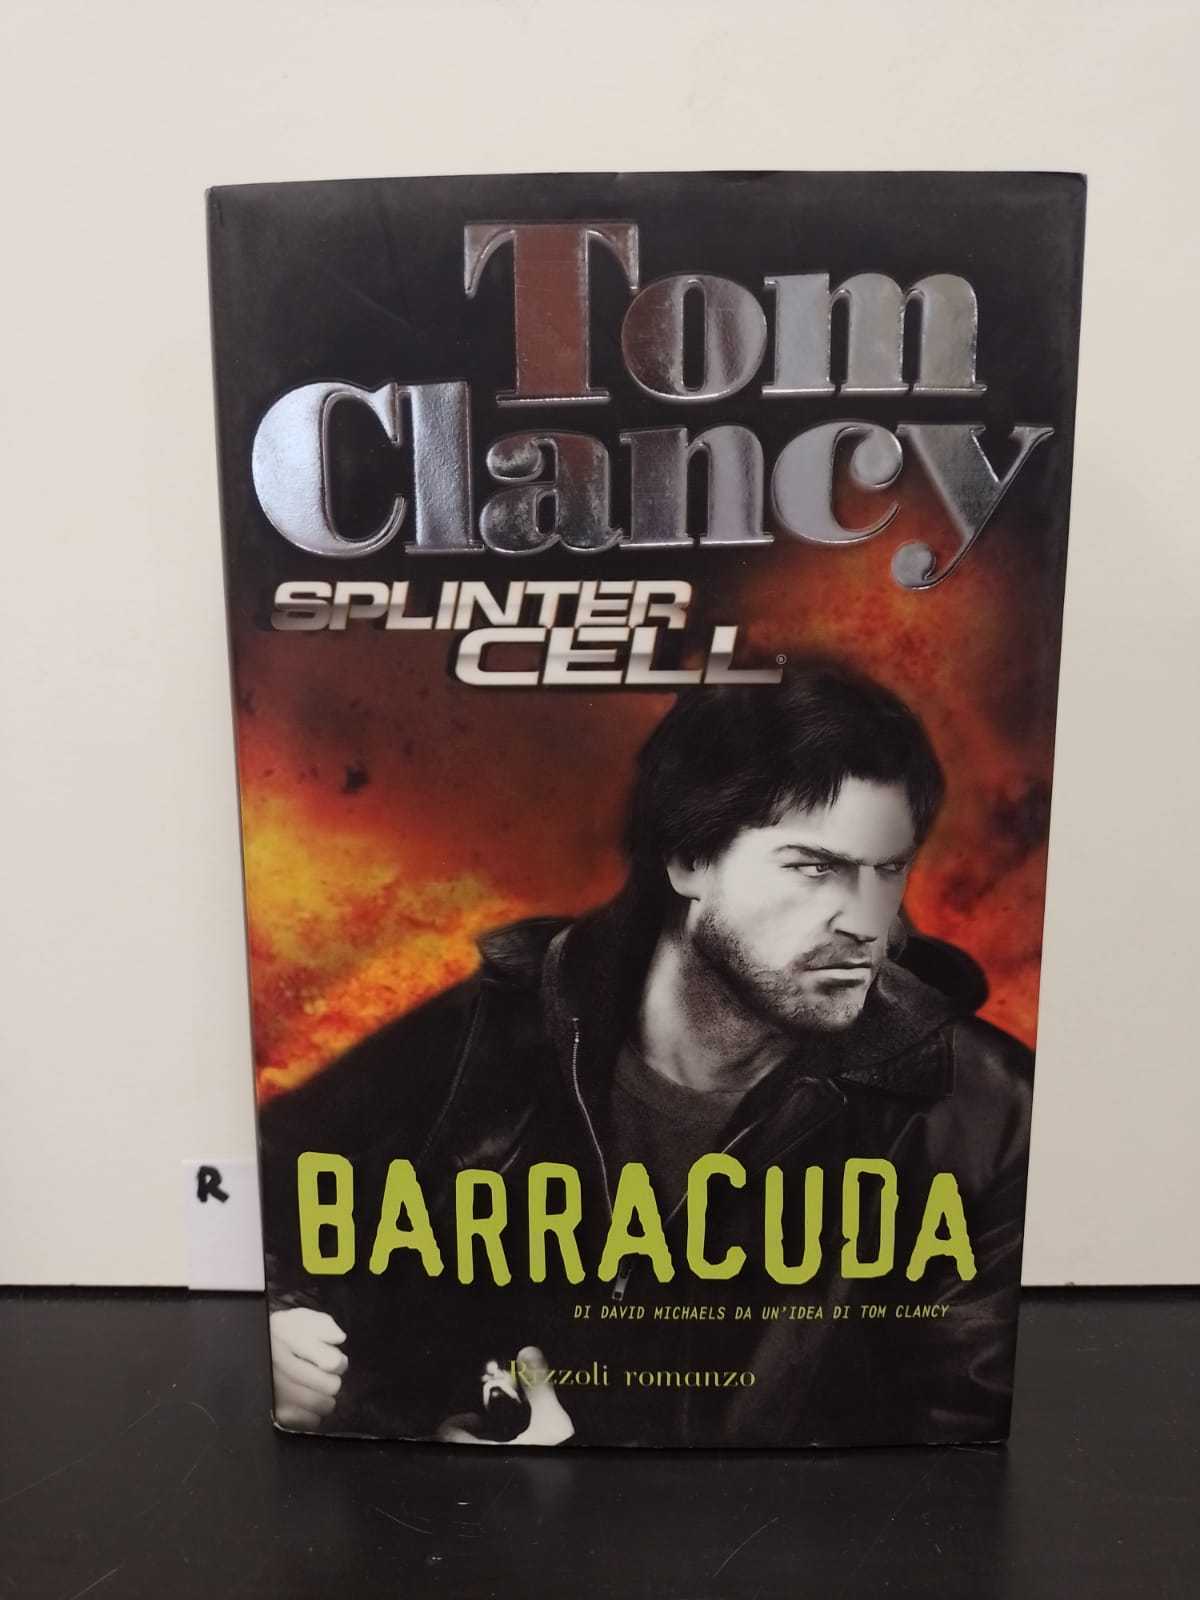 TOM CLANCY SPLINTER CELL SERIES BARRACUDA